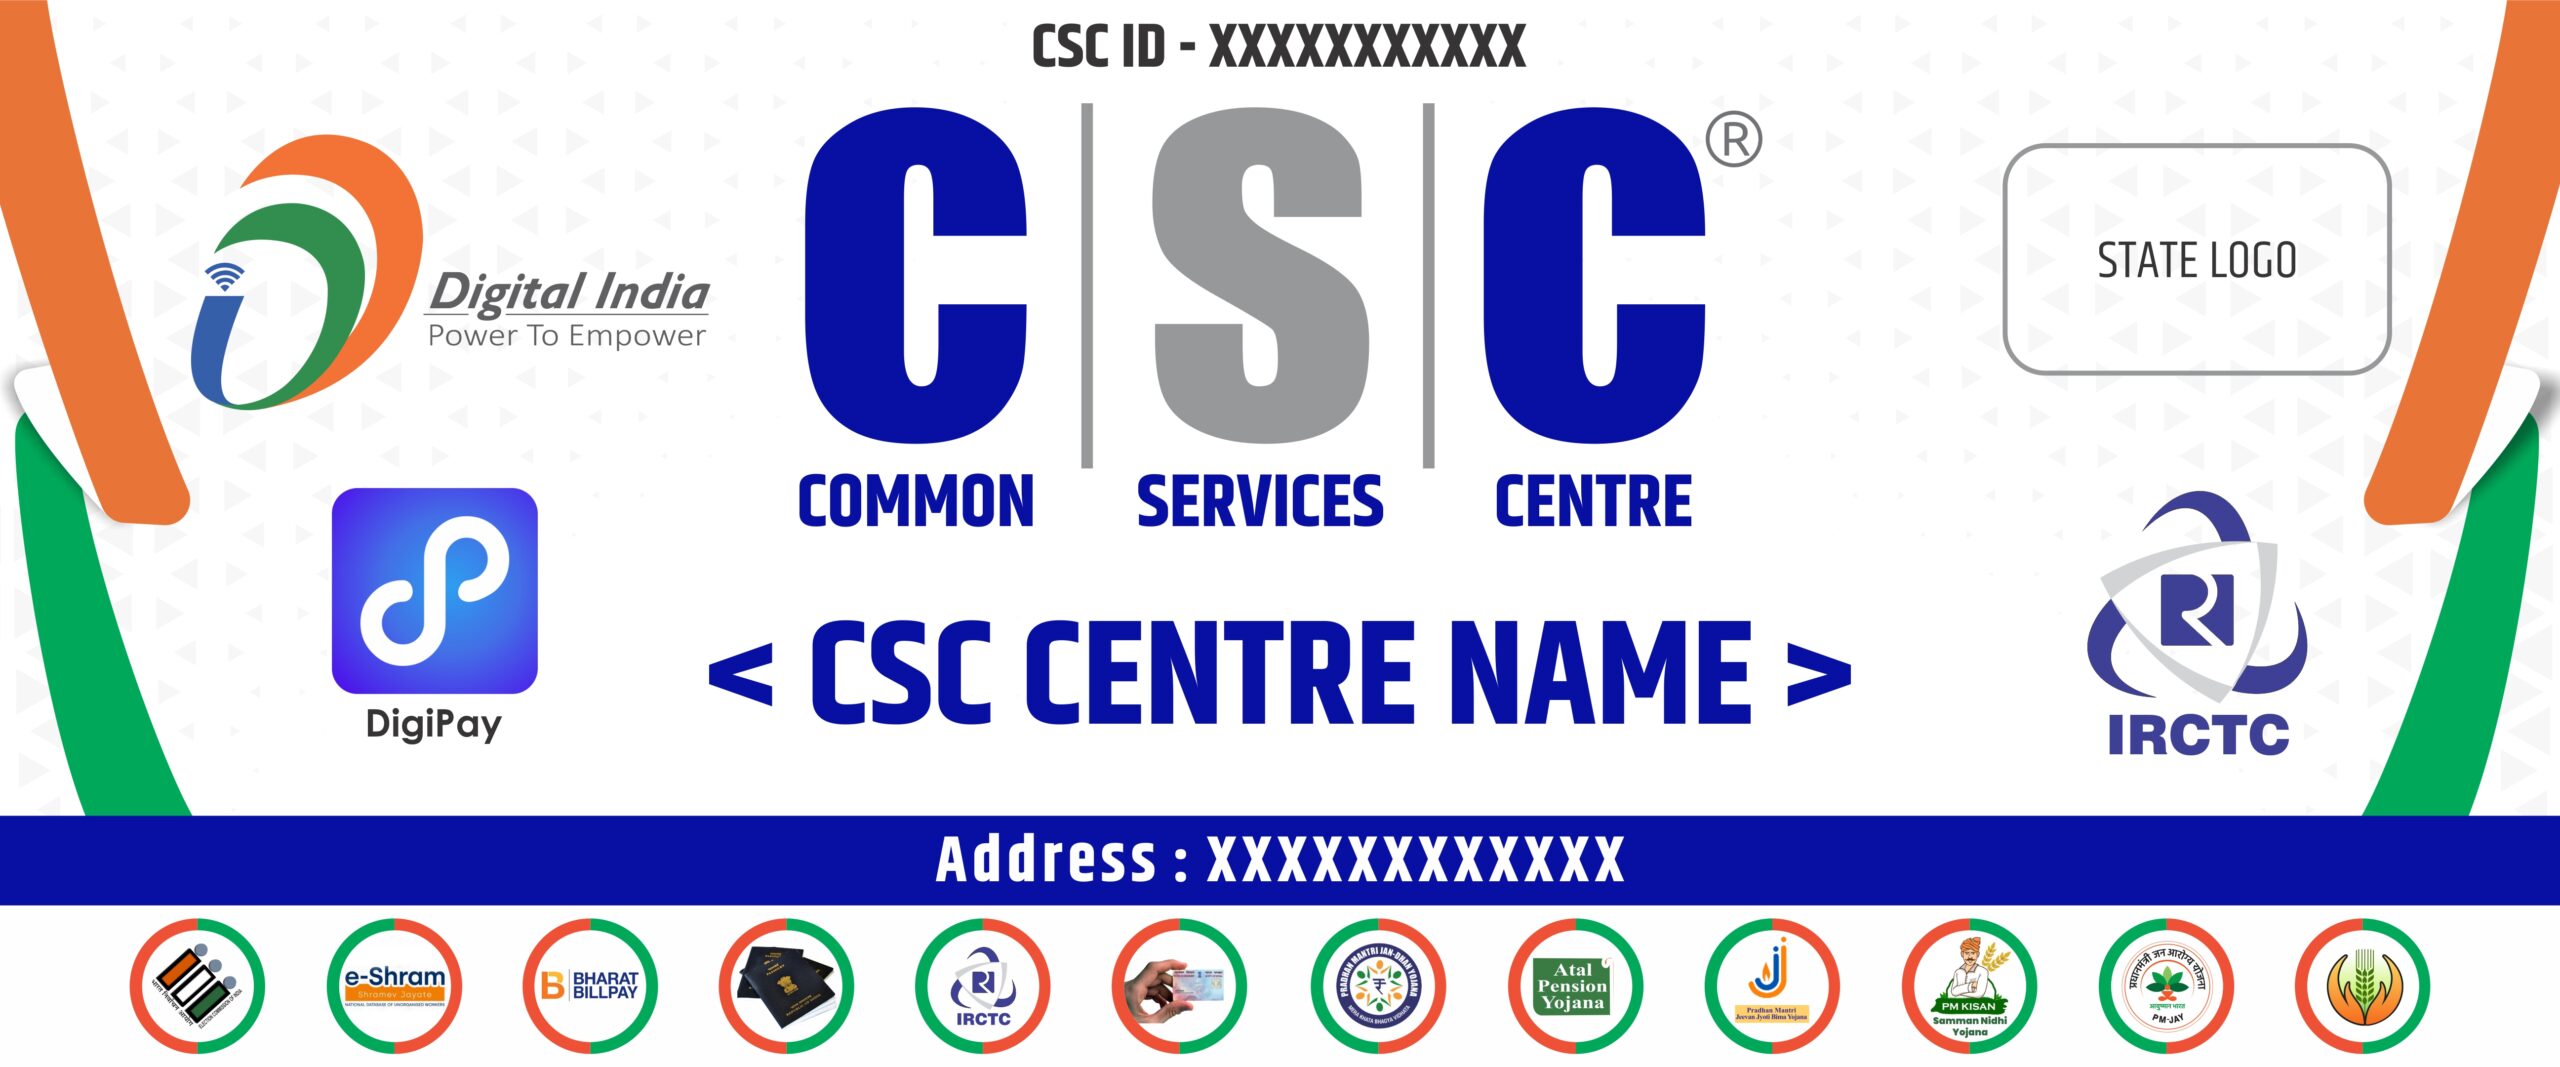 CSC Business Correspondents (BCs)